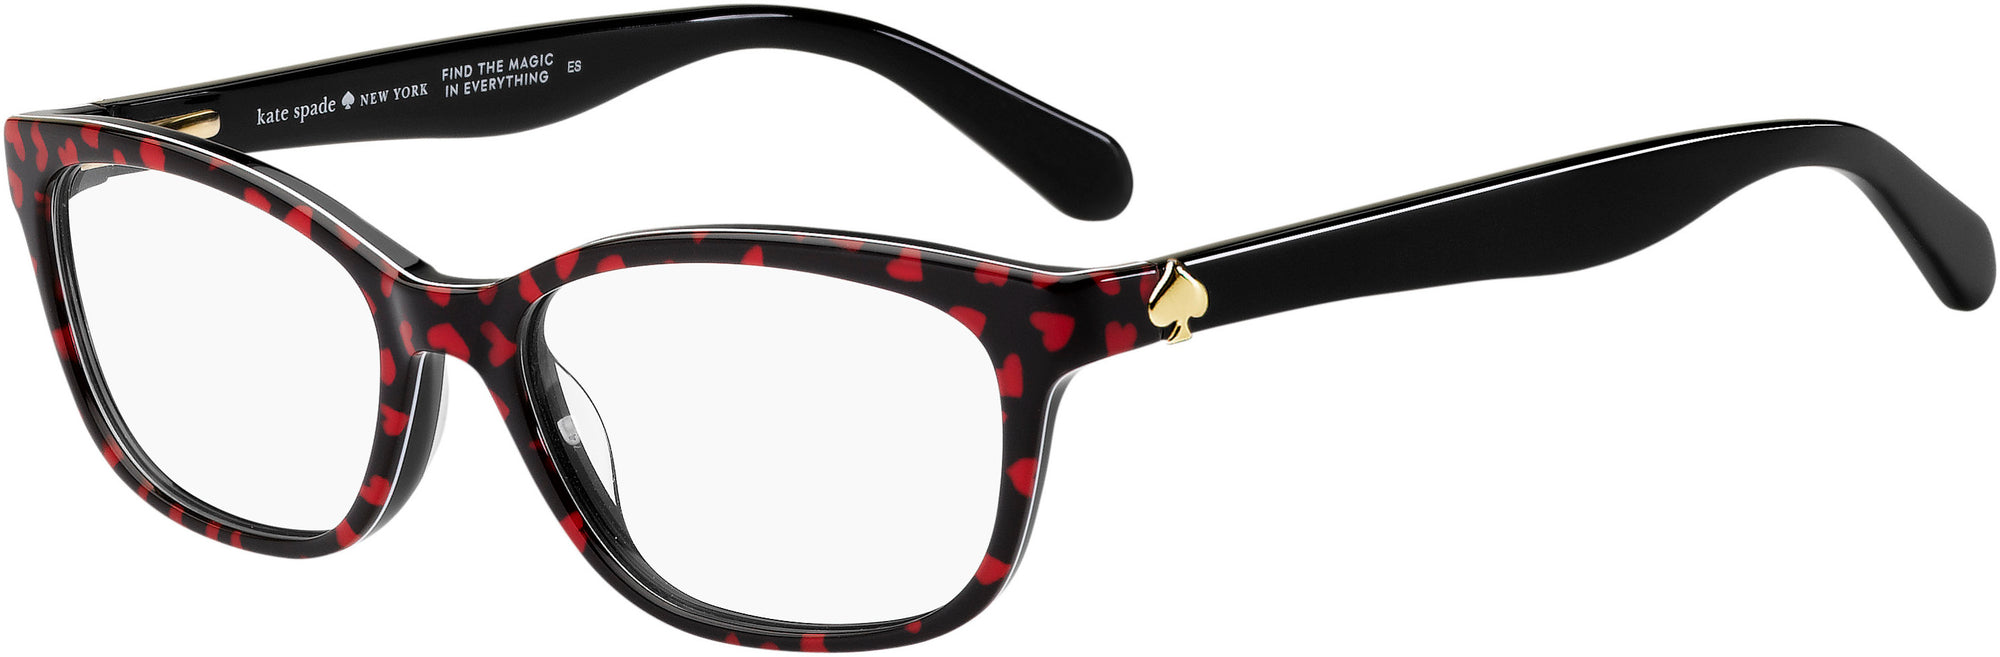 Kate Spade Brylie Rectangular Eyeglasses For Woman